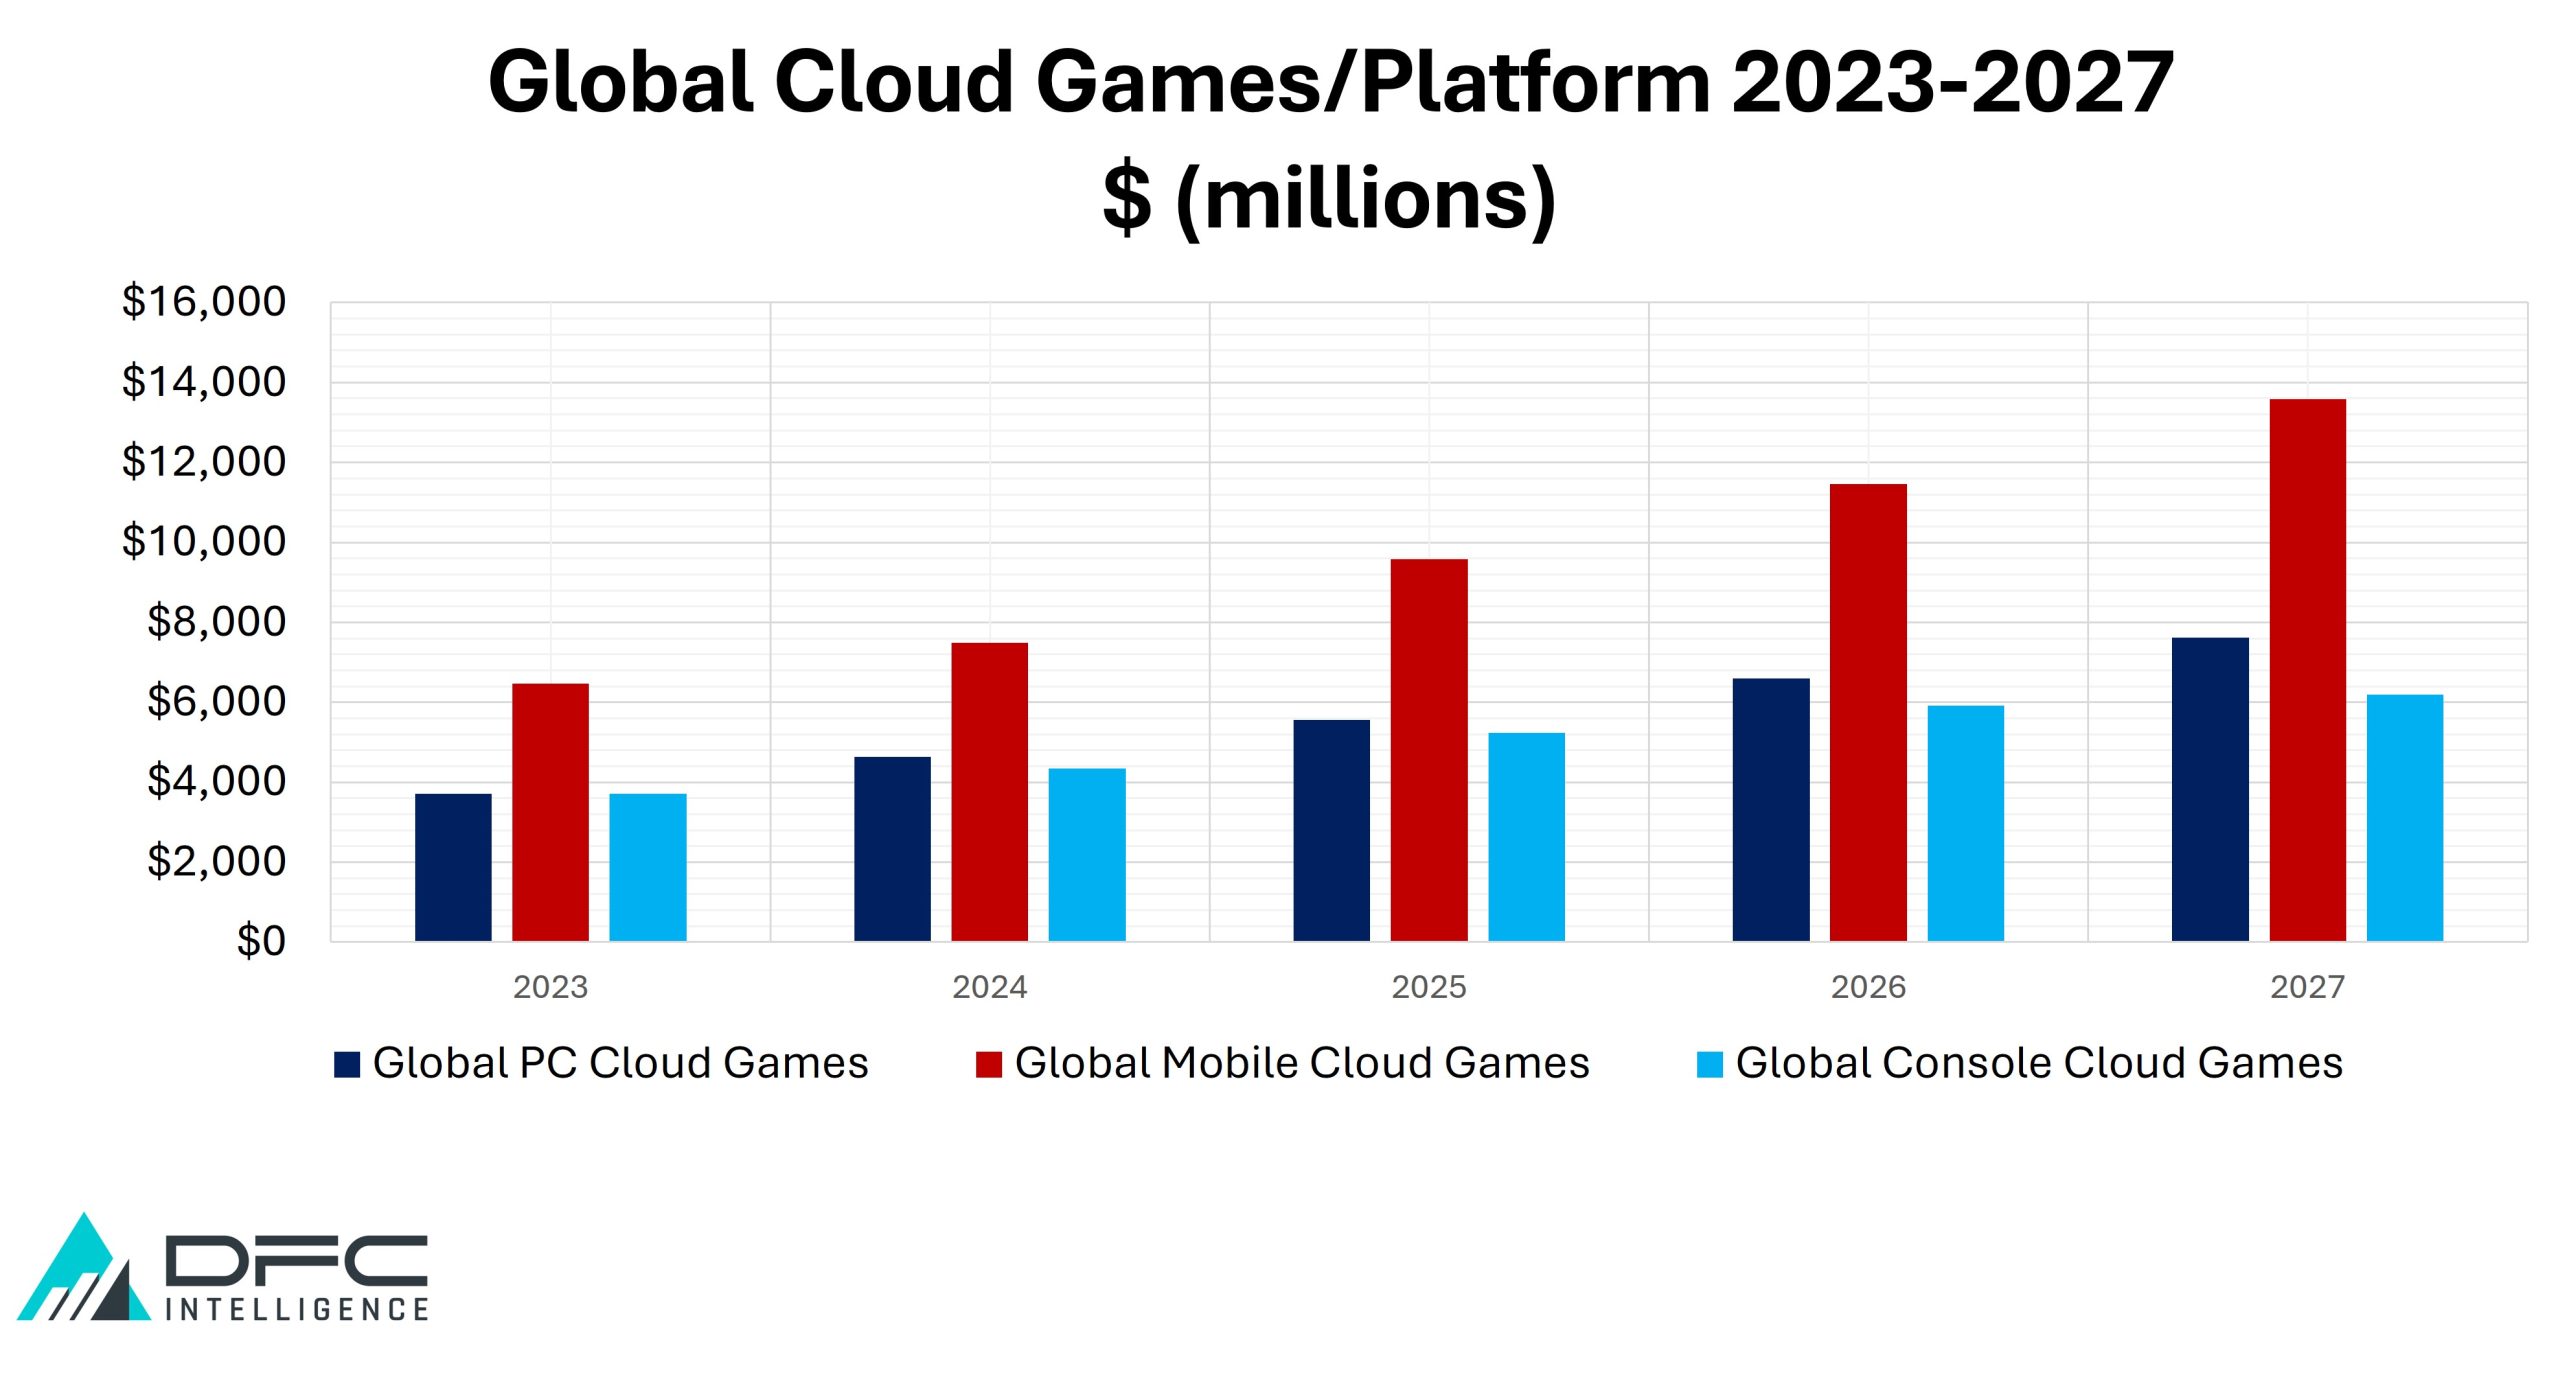 Cloud Games by Platform